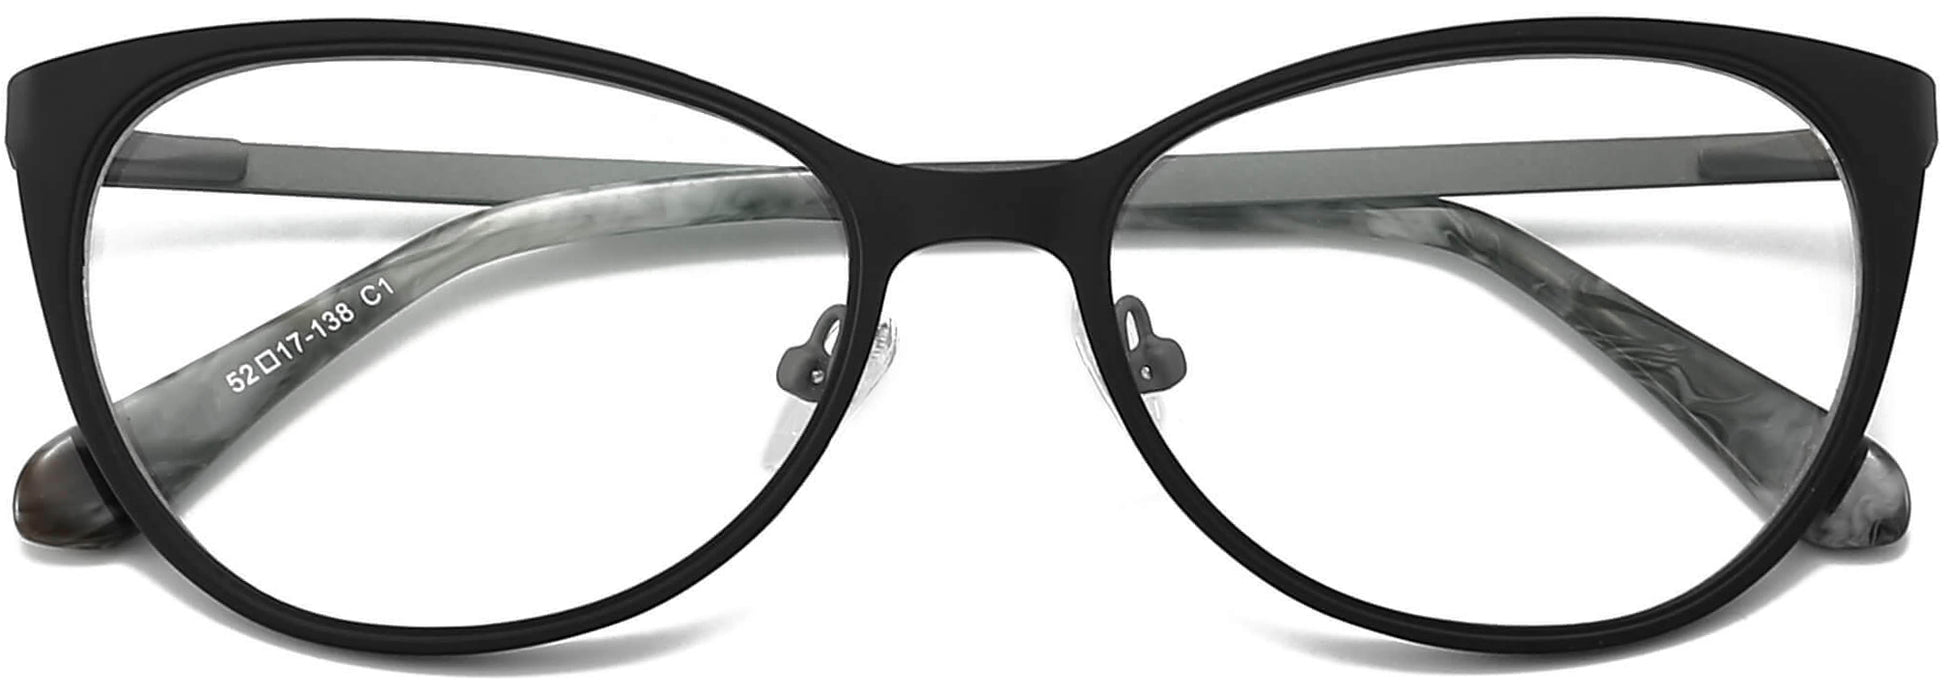 shay cateye black Eyeglasses from ANRRI, closed view